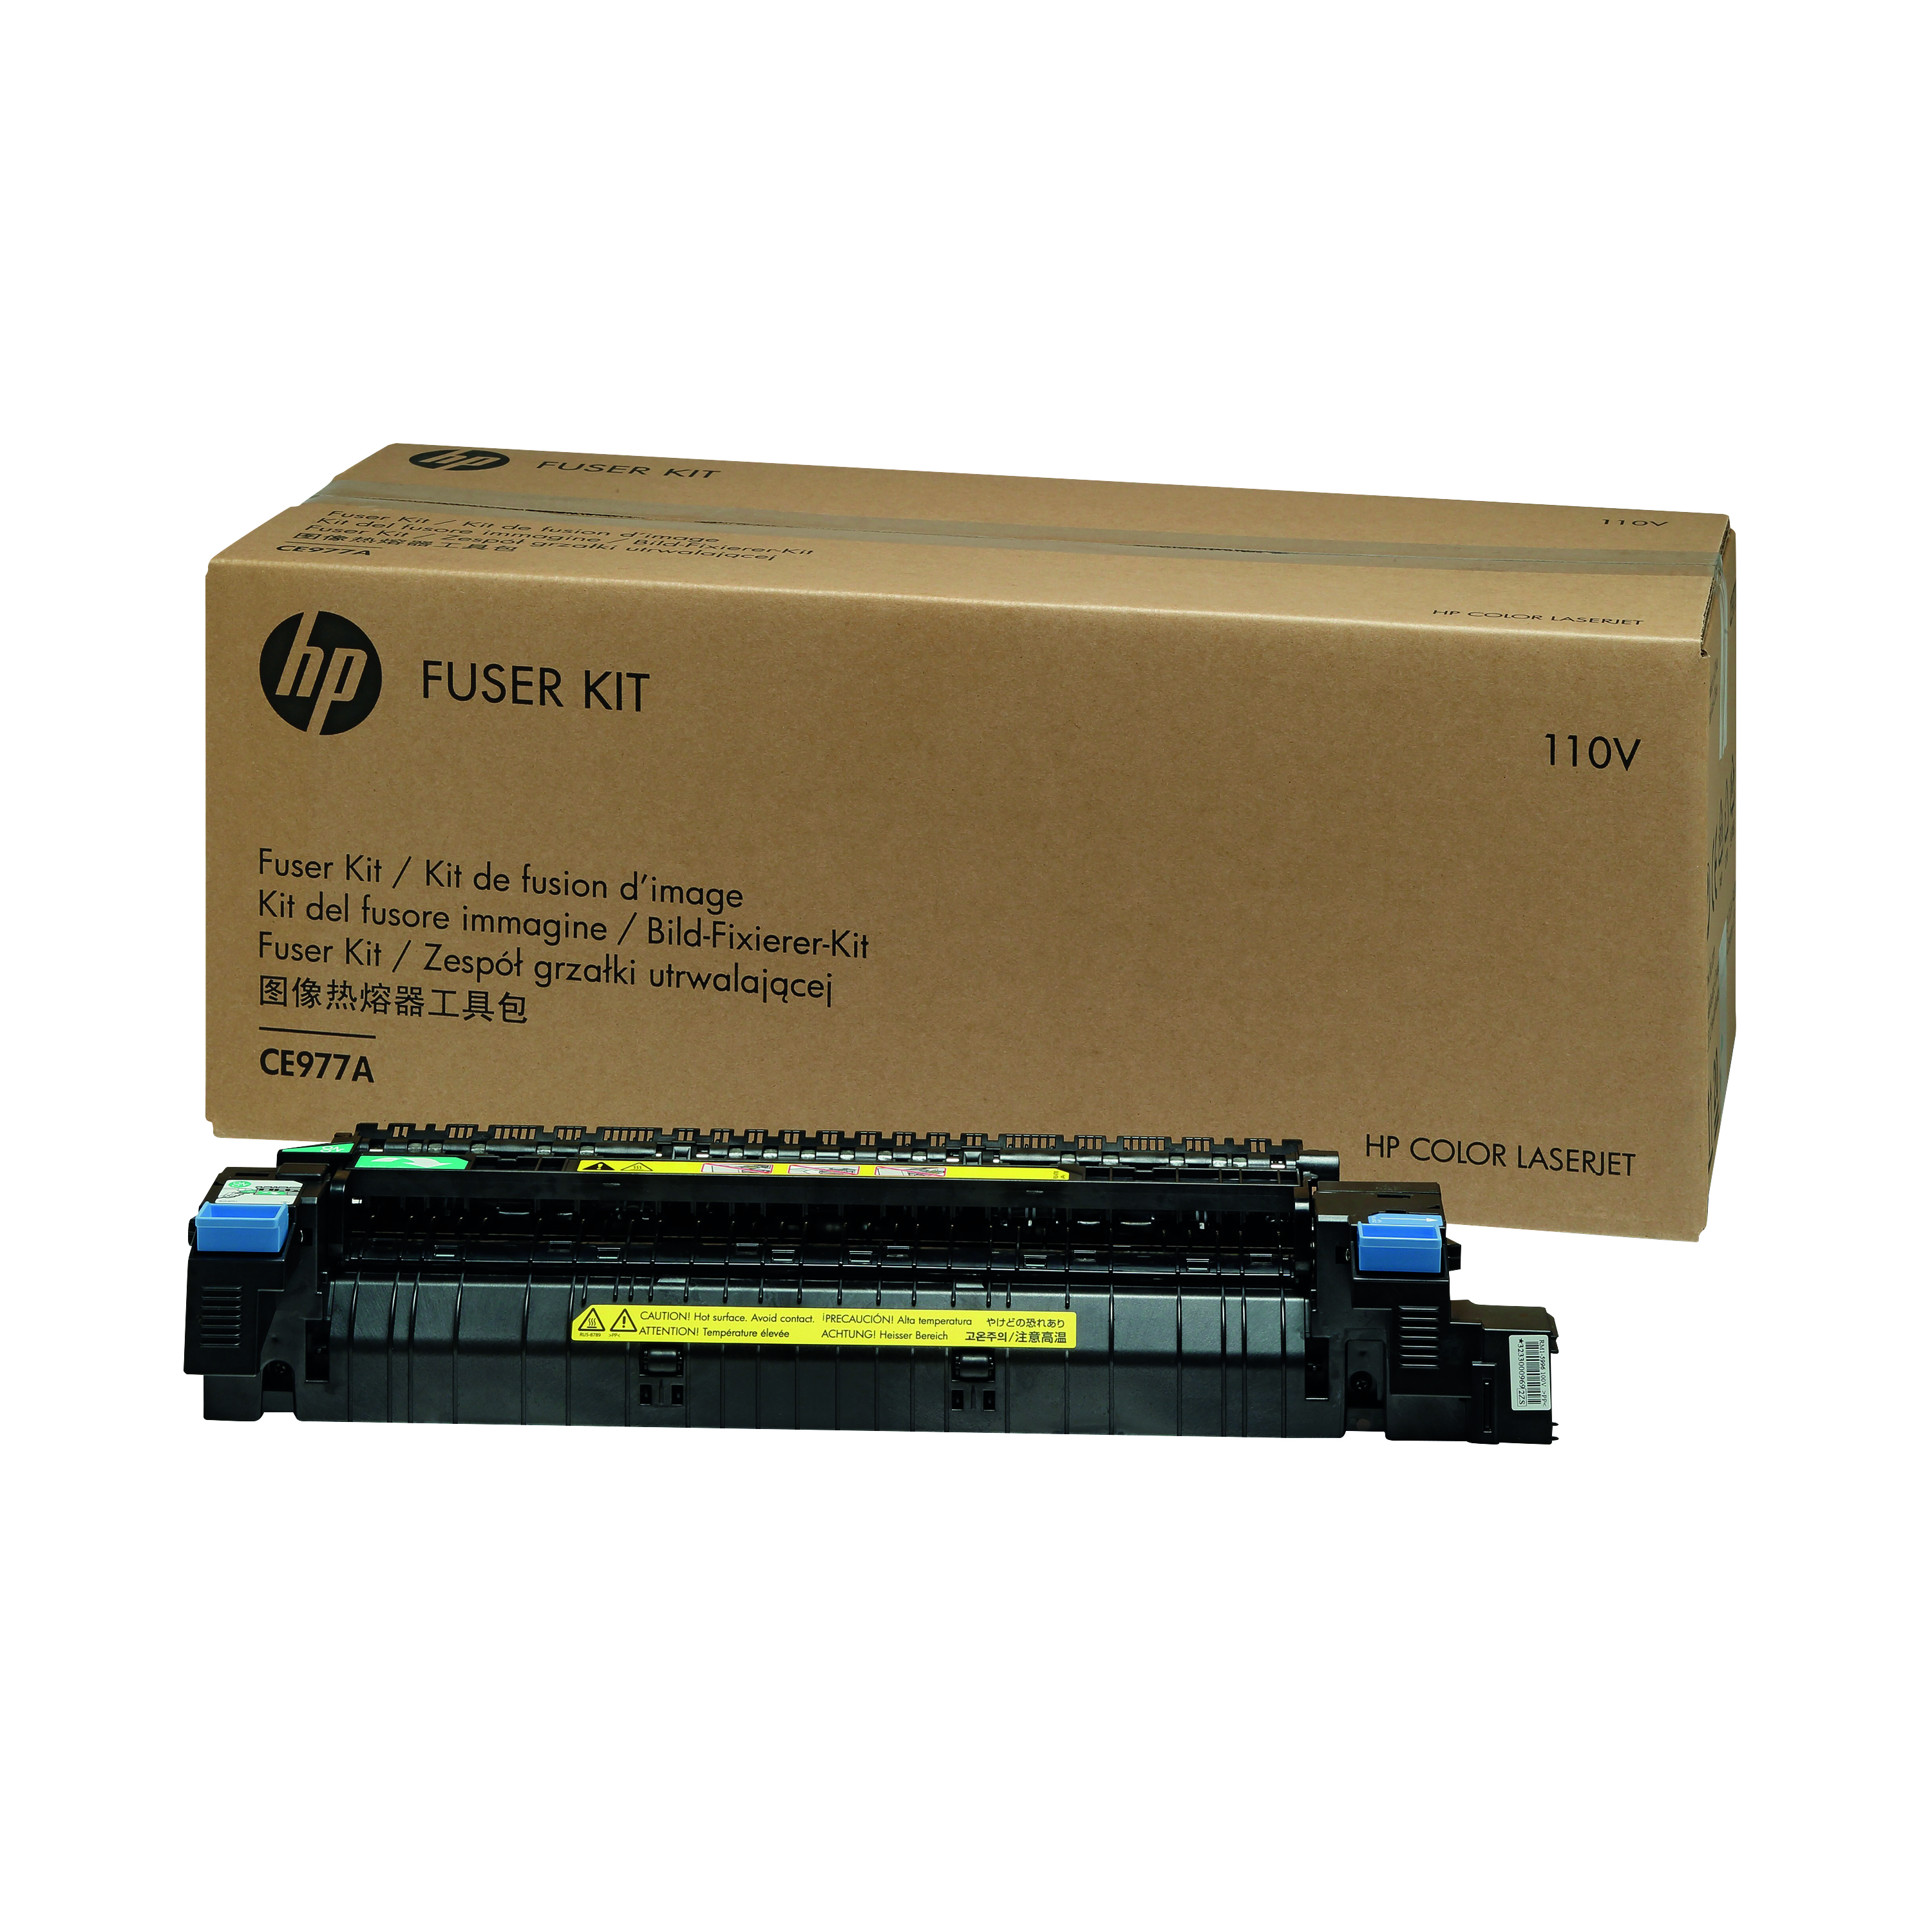 HP Colour LaserJet CP5525/M750 220V Fuser Kit CE978A